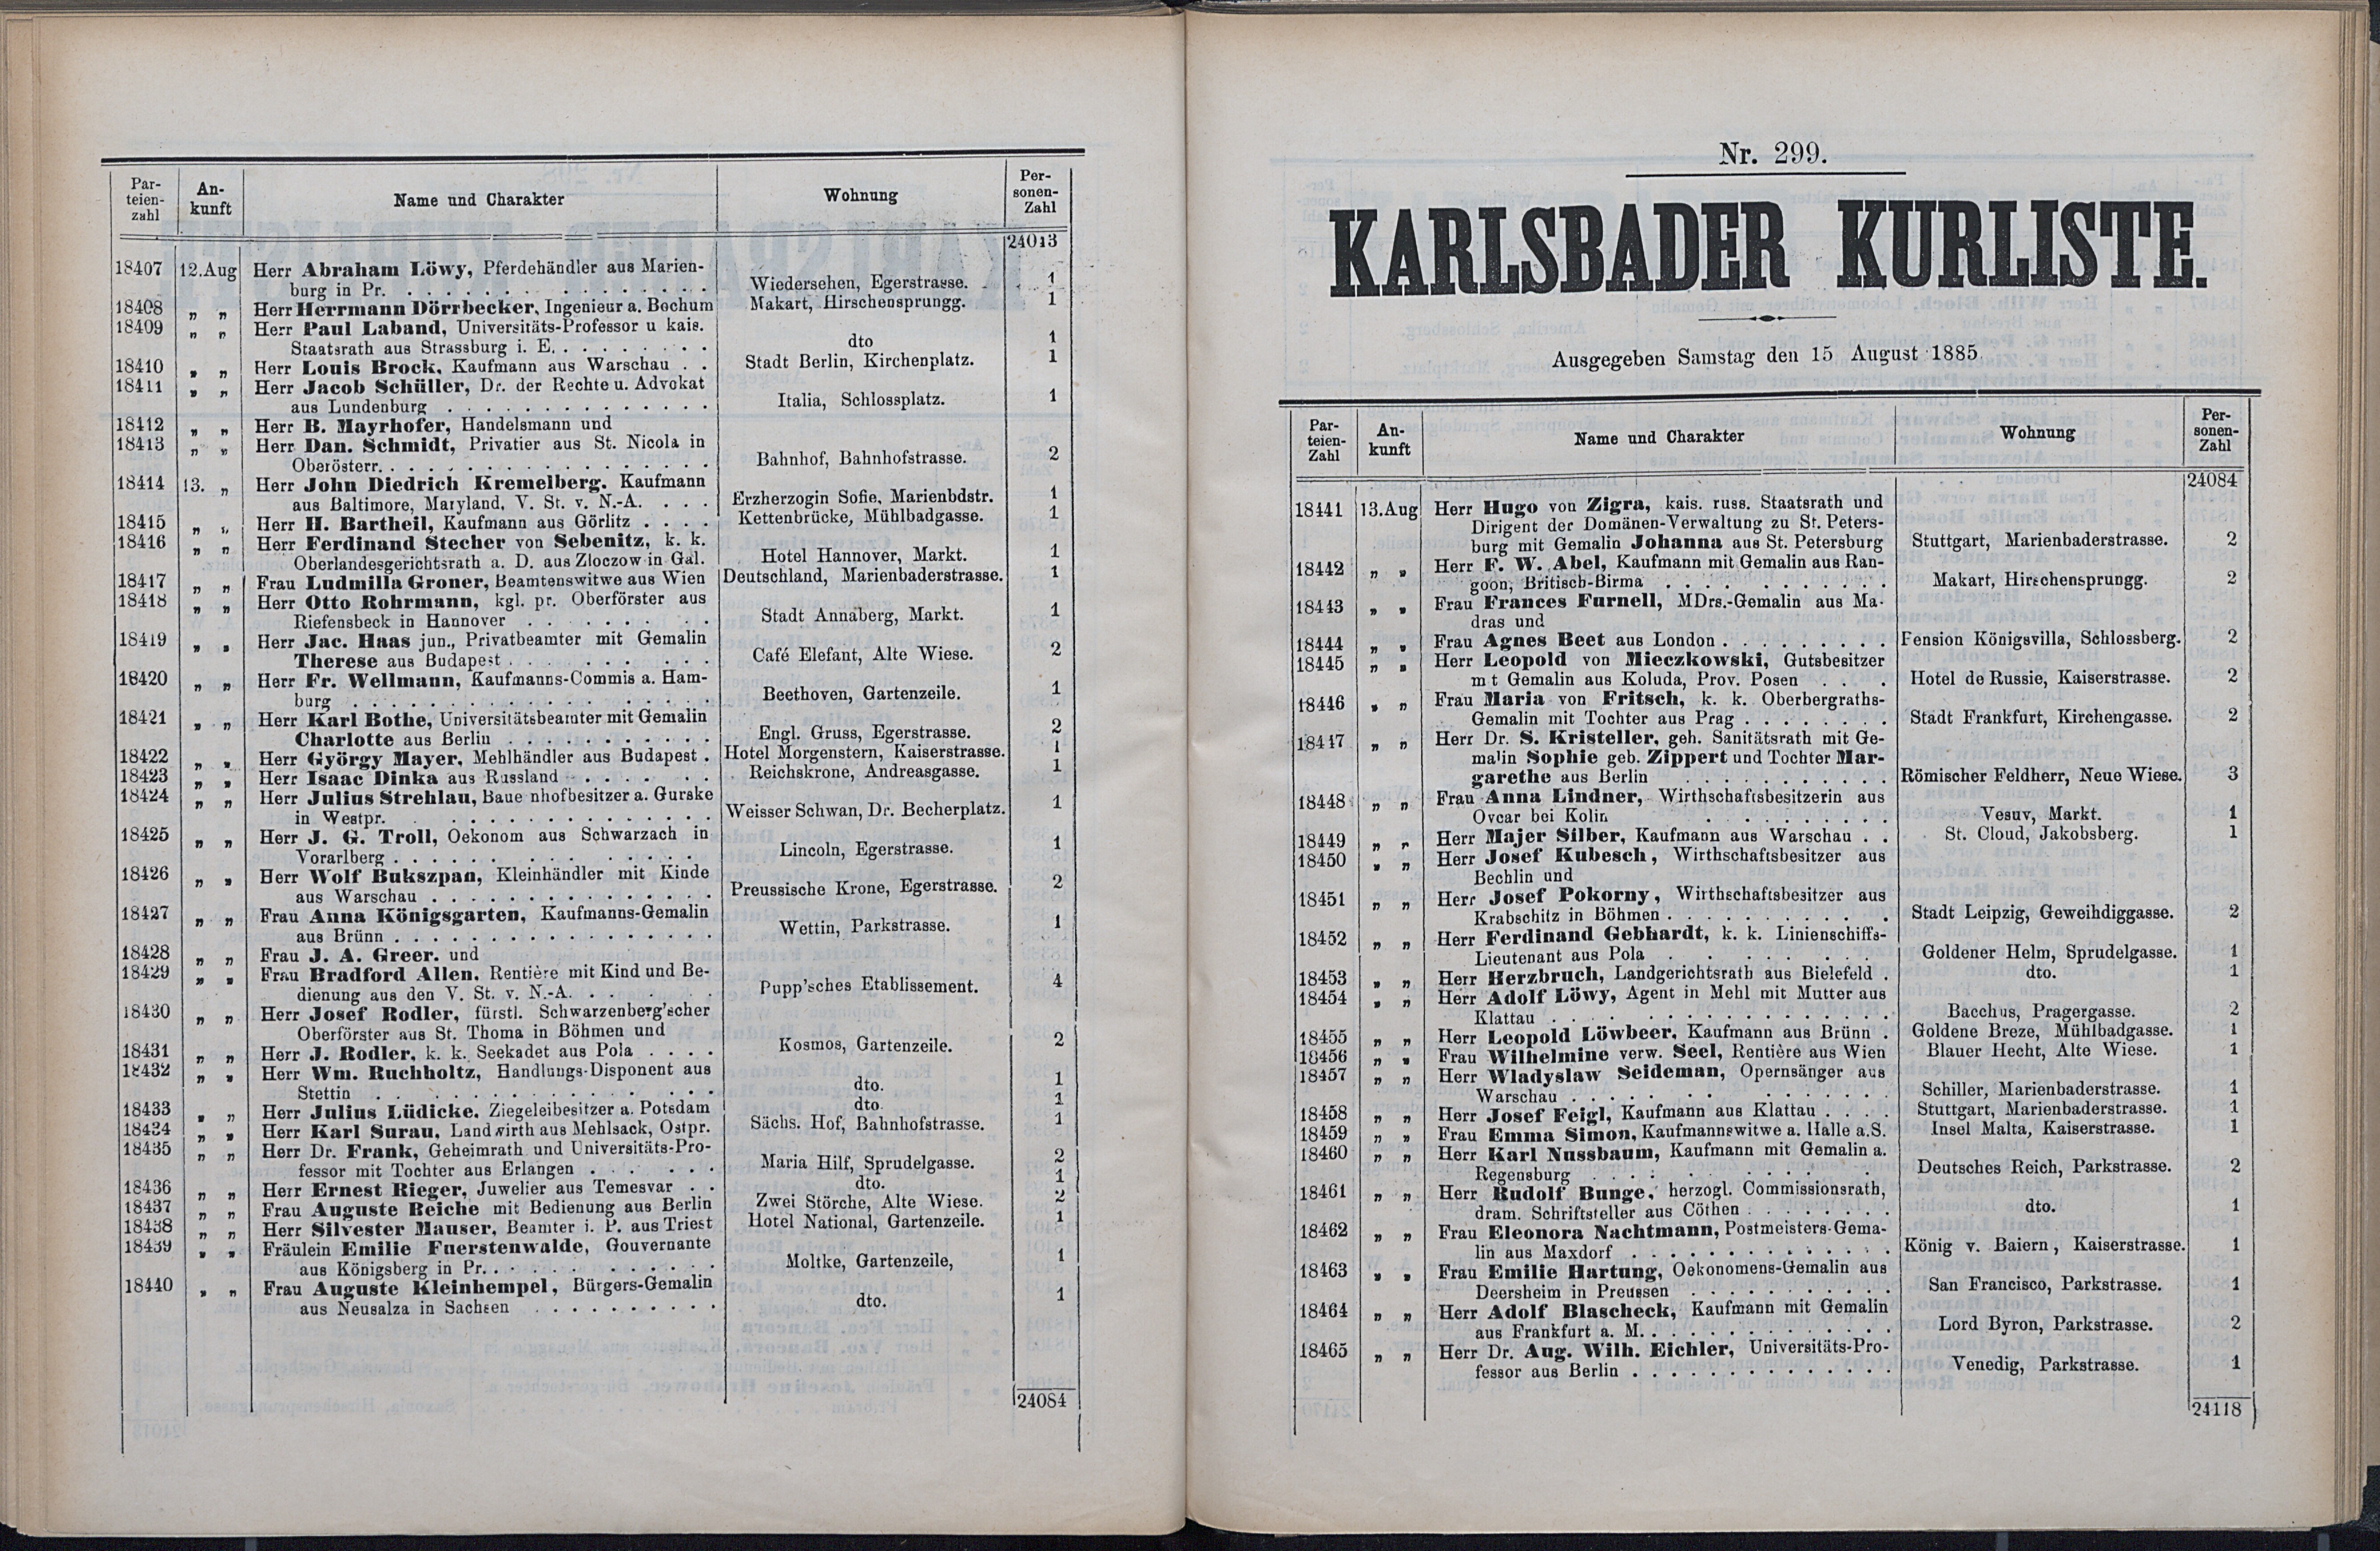 351. soap-kv_knihovna_karlsbader-kurliste-1885_3520